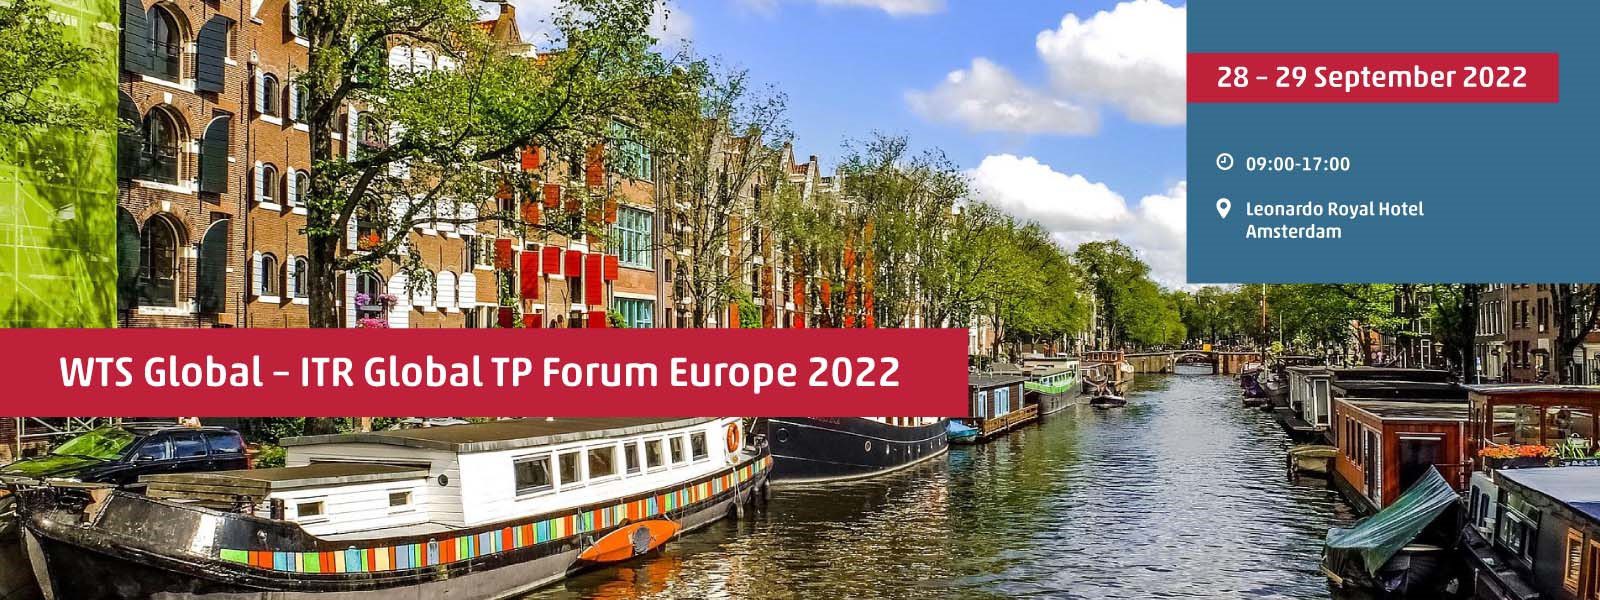 ITR Global TP Forum Europe 2022